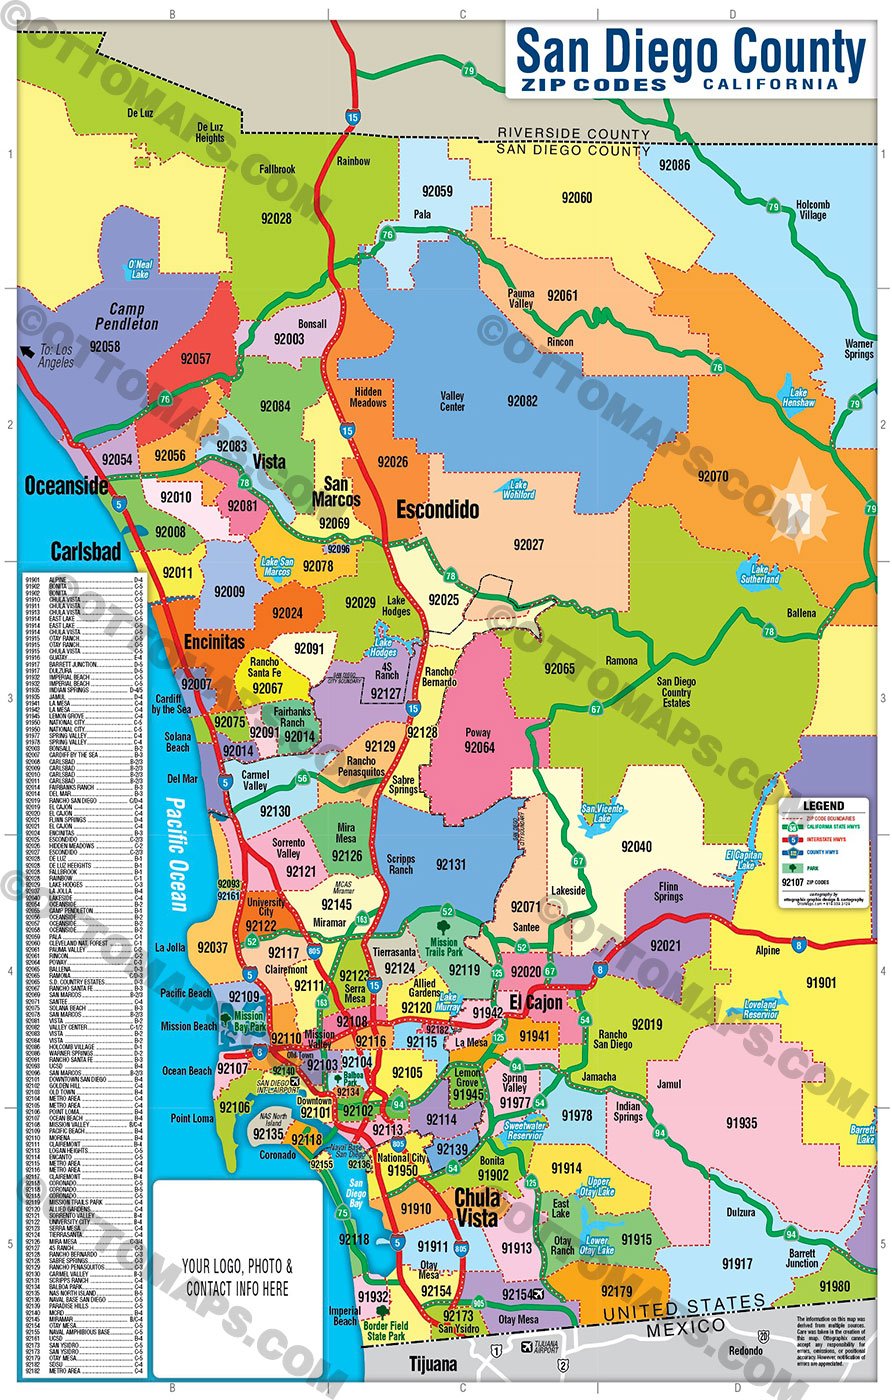 San Diego County Zip Code Map - COASTAL (Zip Codes colorized)